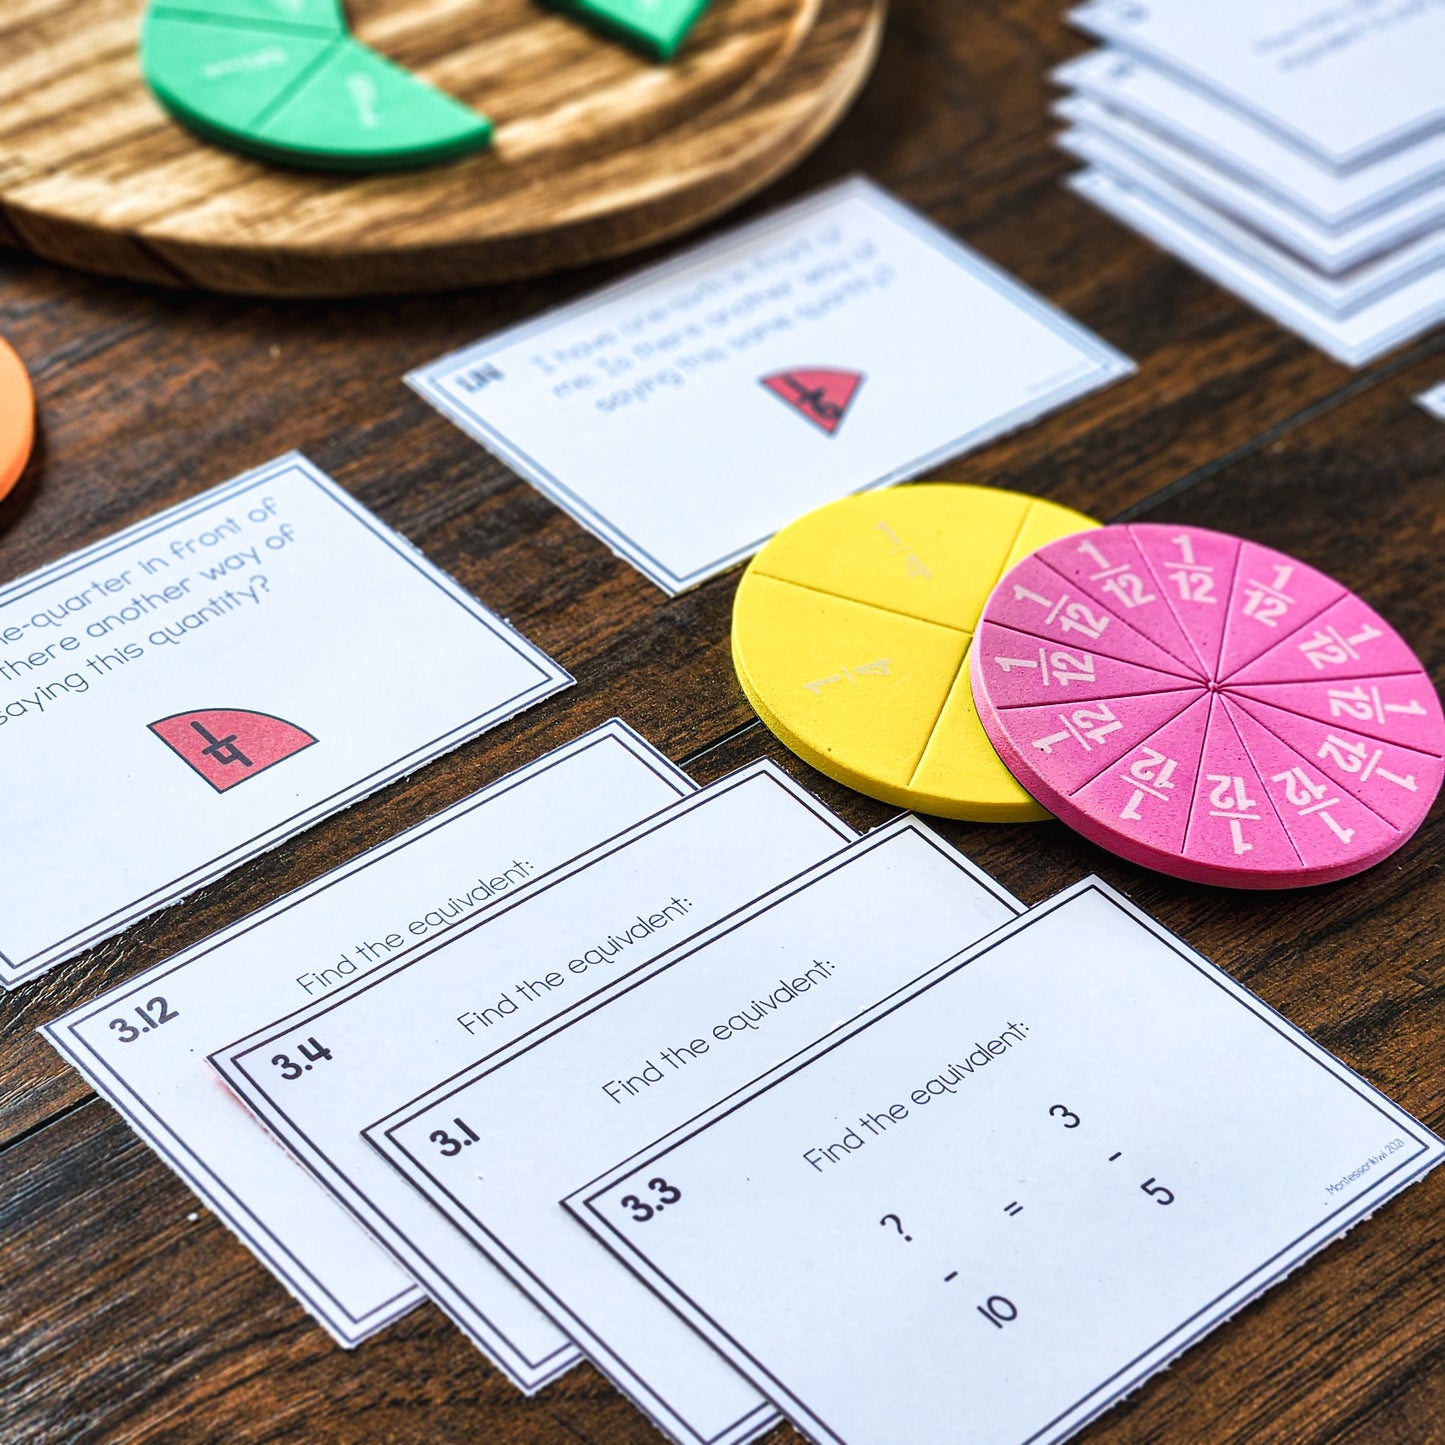 Equivalent Fraction Task Cards (Montessori) - montessorikiwi